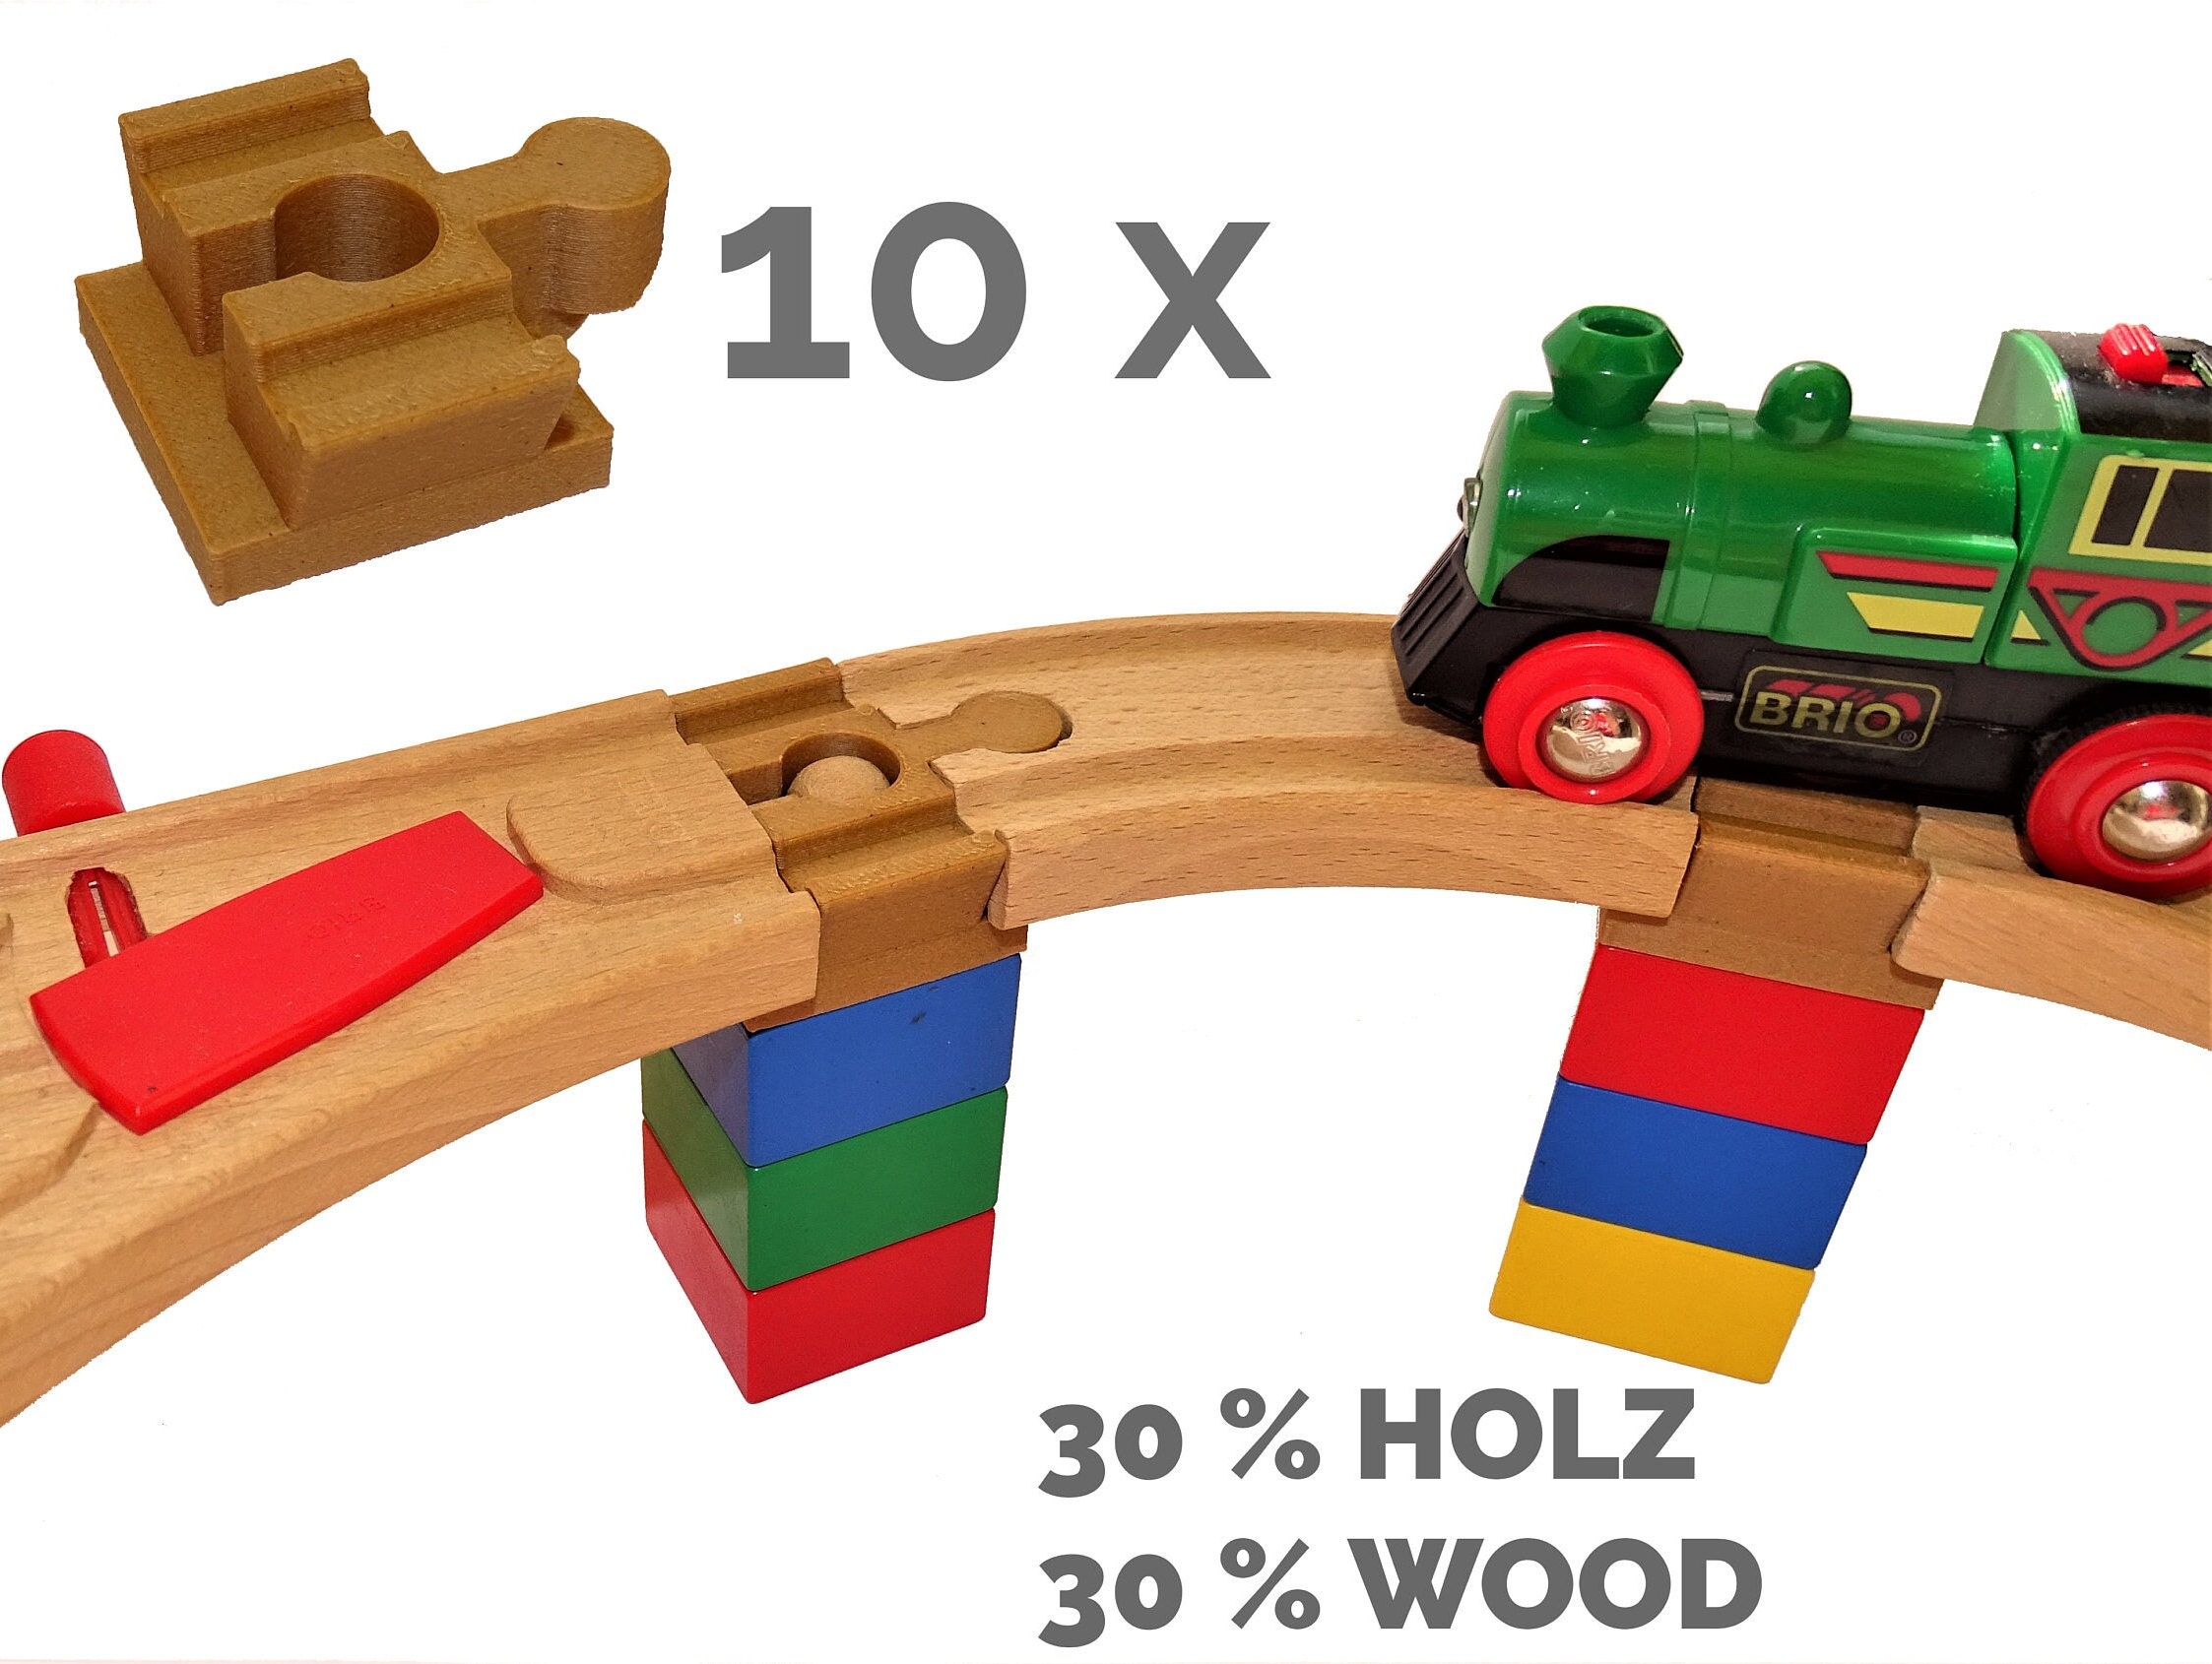 Castle for Wooden Train Track / Brio / Lillabo / Playtive / Hape / Duplo /  Imaginarium / Thomas / Melissa Doug 